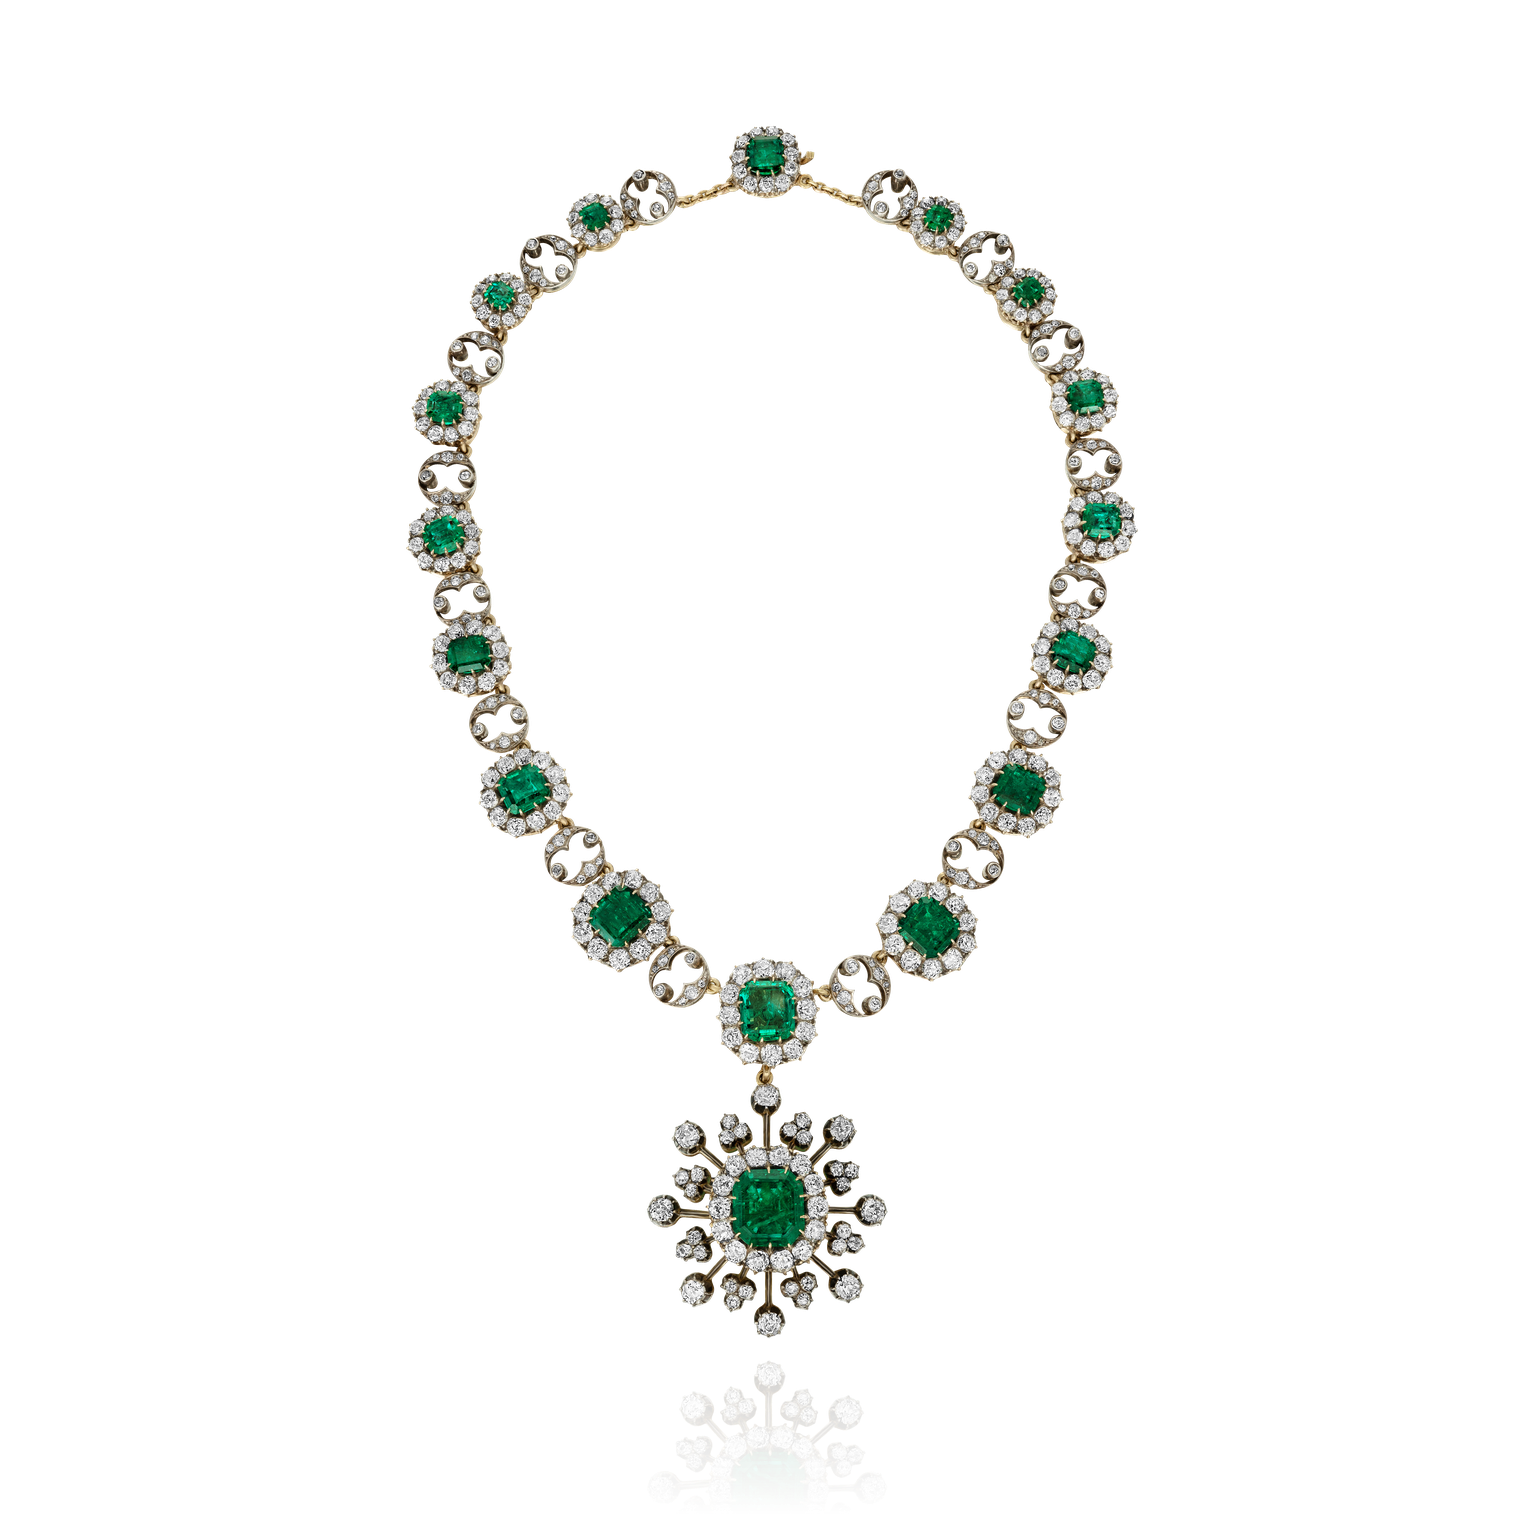 Antique Emerald and Diamond Necklace